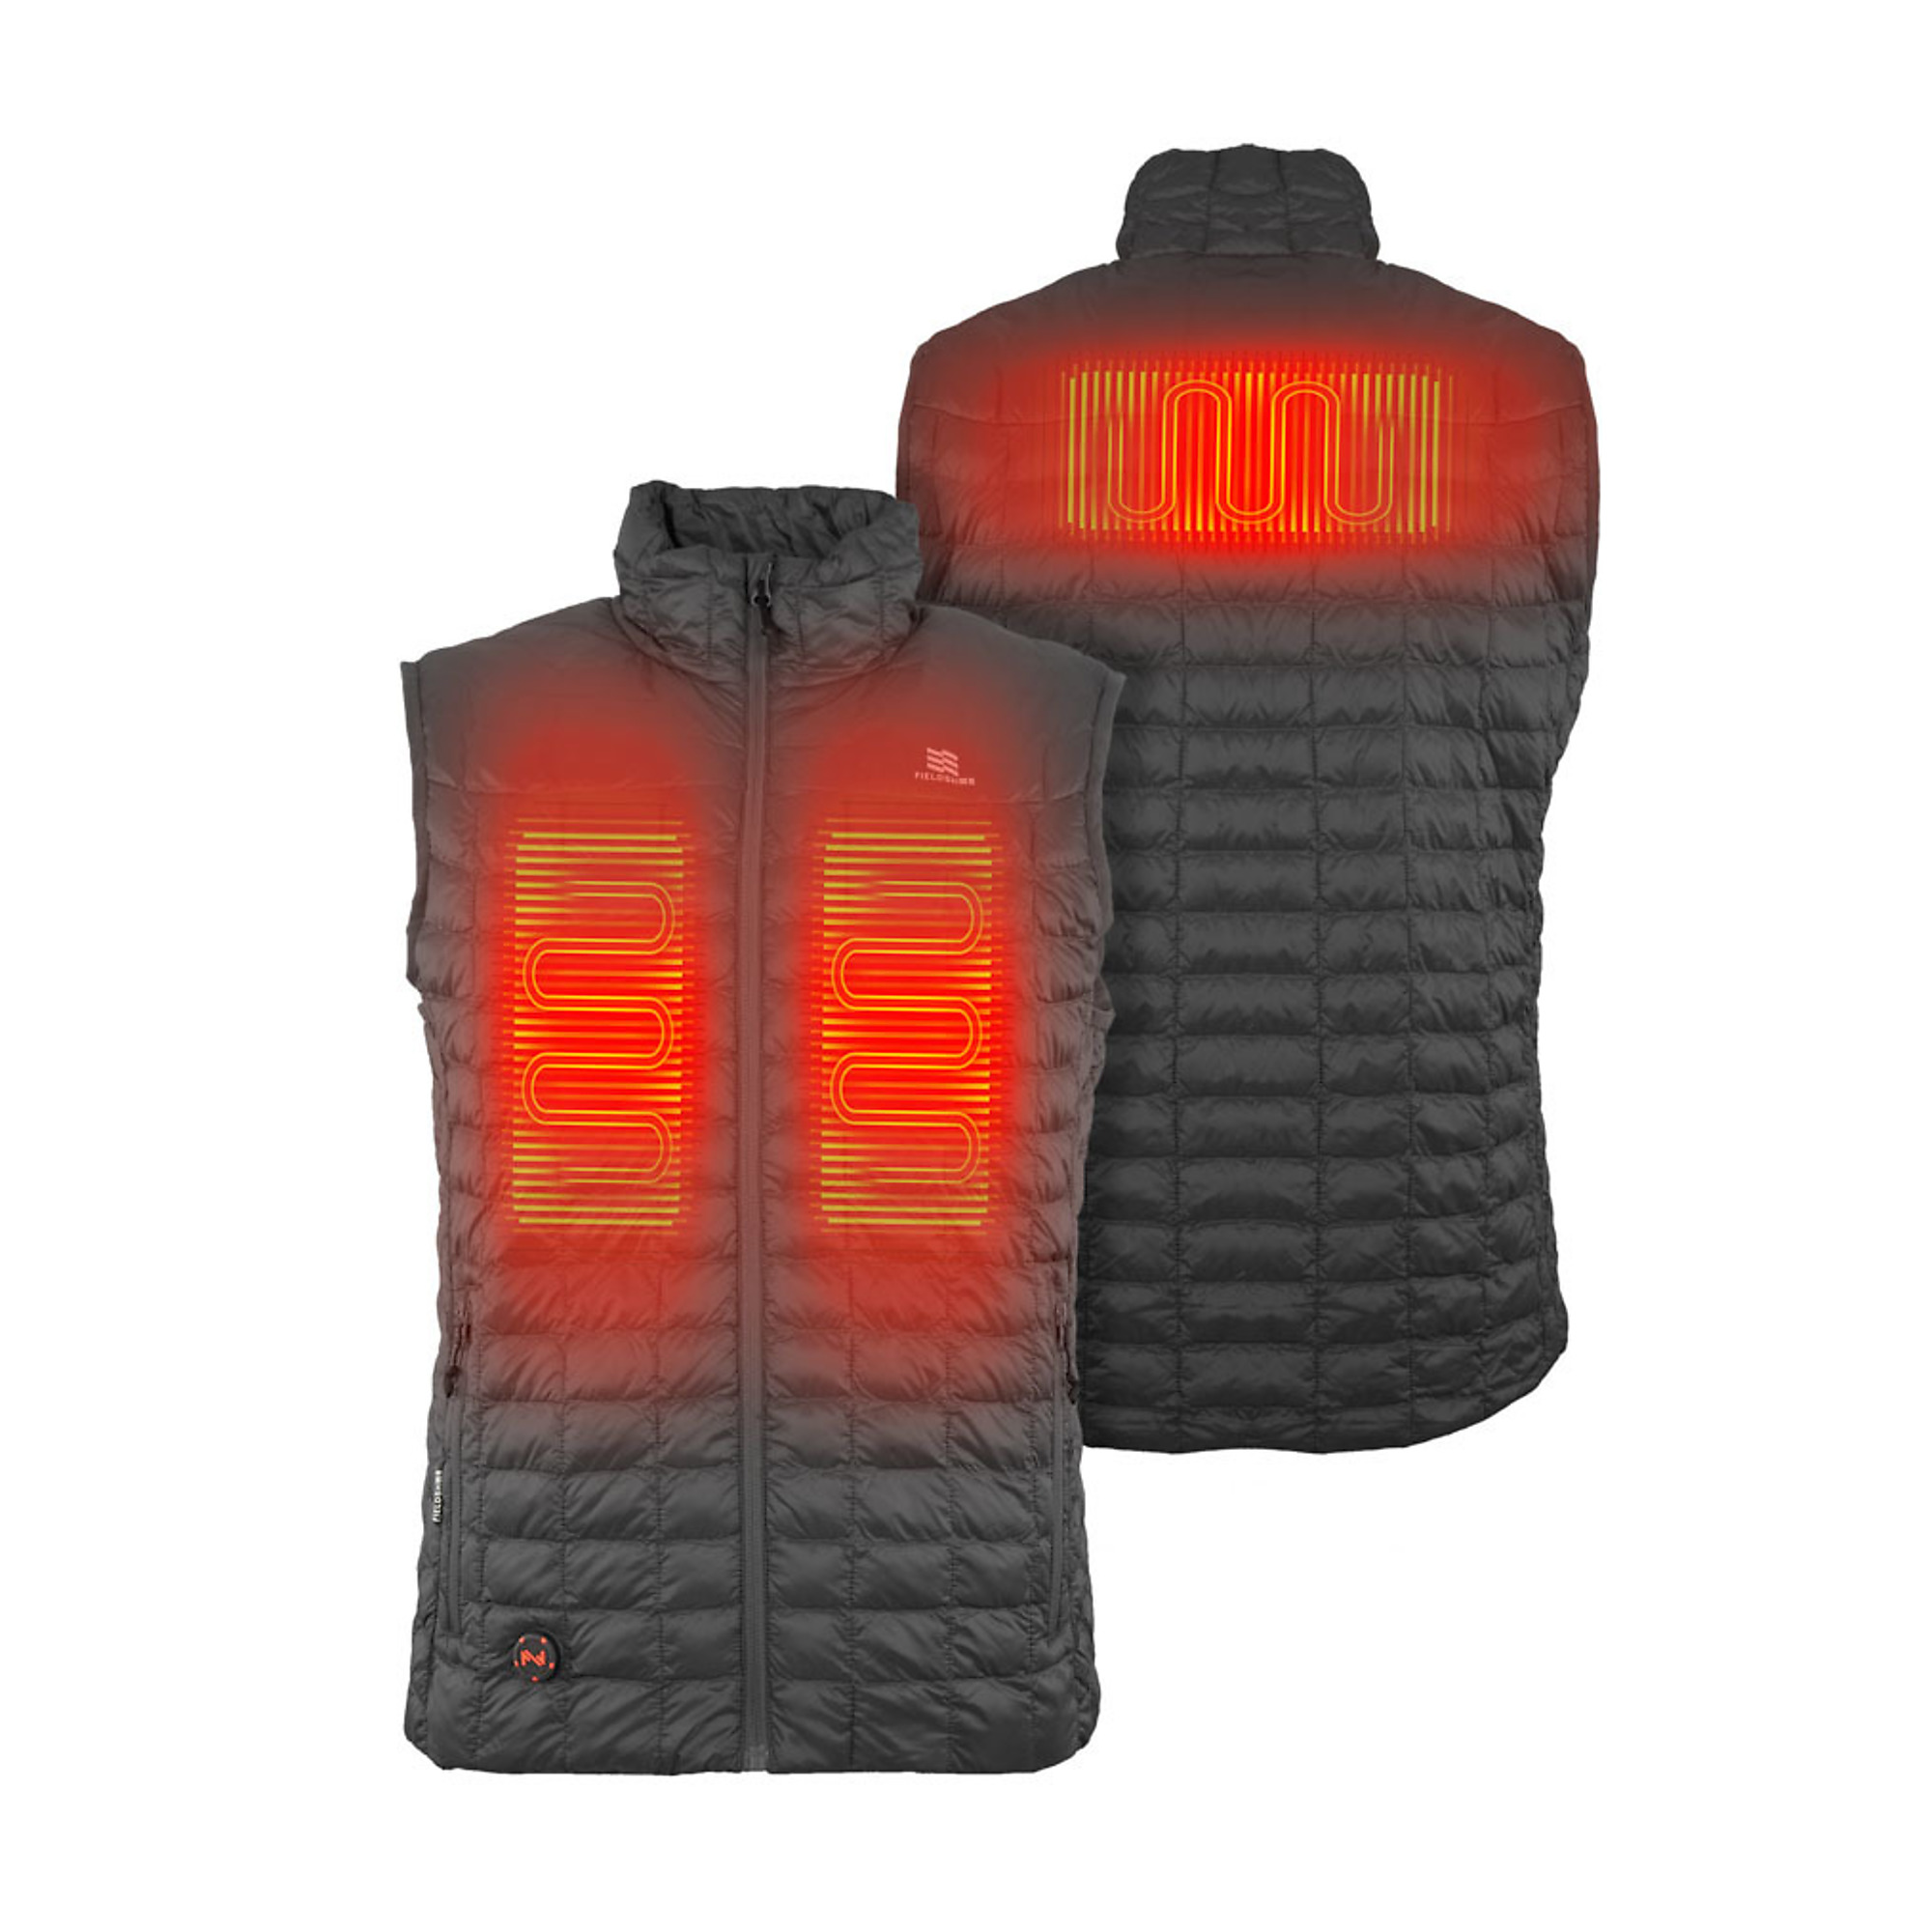 Fieldsheer, Men's Backcountry Heated Vest with 7.4v Battery, Size 4XL, Color Black, Model MWMV04010820